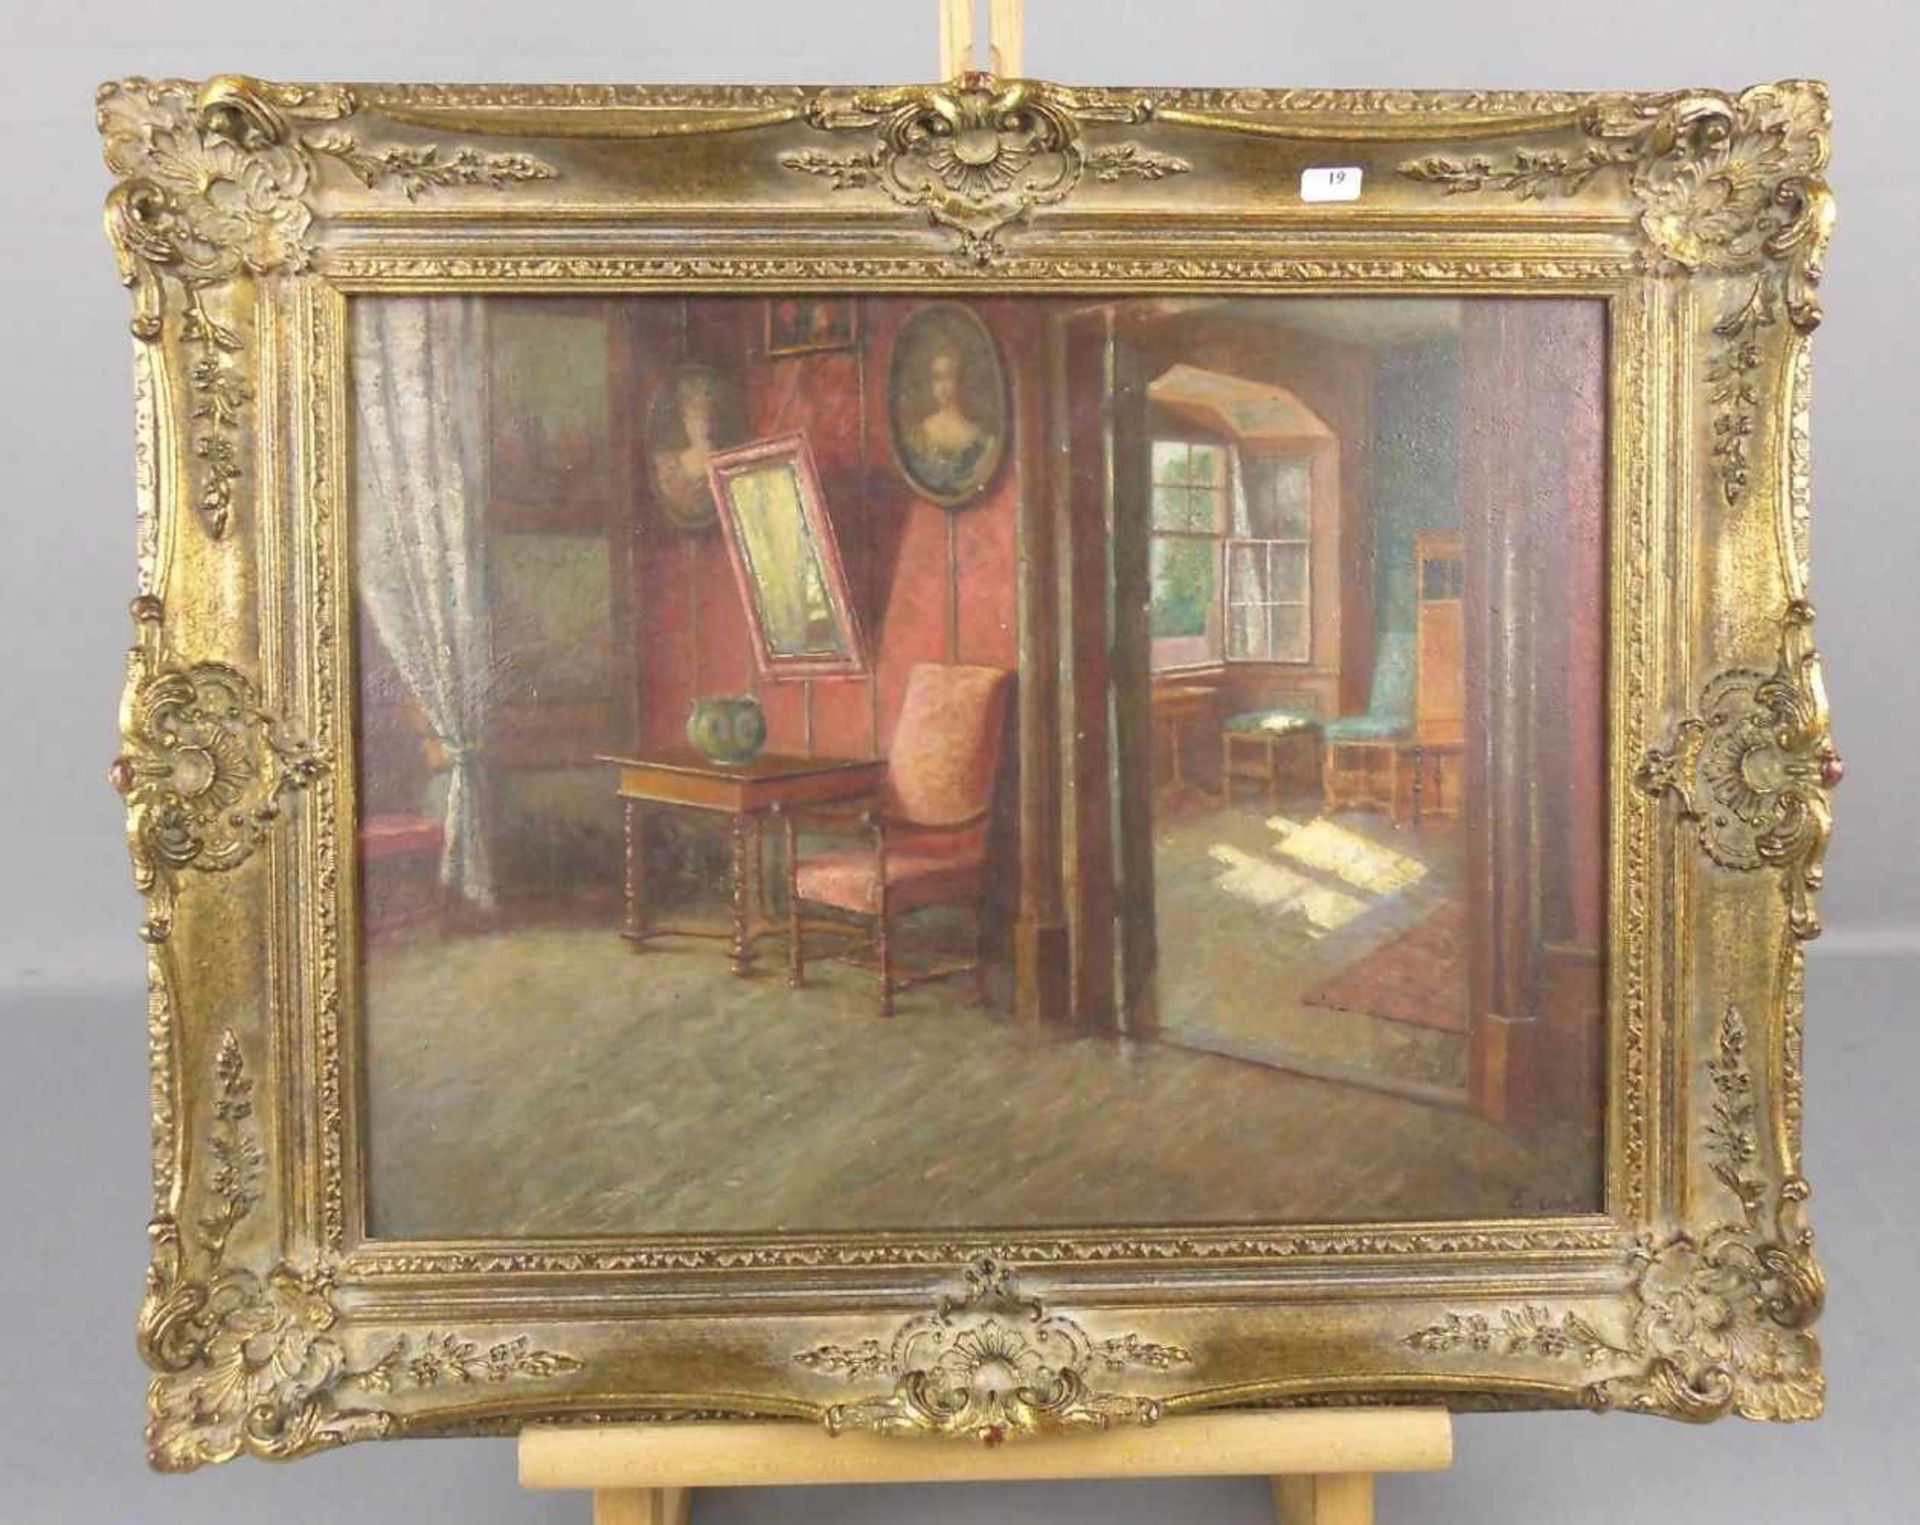 UHL, EMIL (Brüx / Most 1864-1945 Bayrisch Gmain), Gemälde / painting: "Interieur", Öl auf Holz / oil